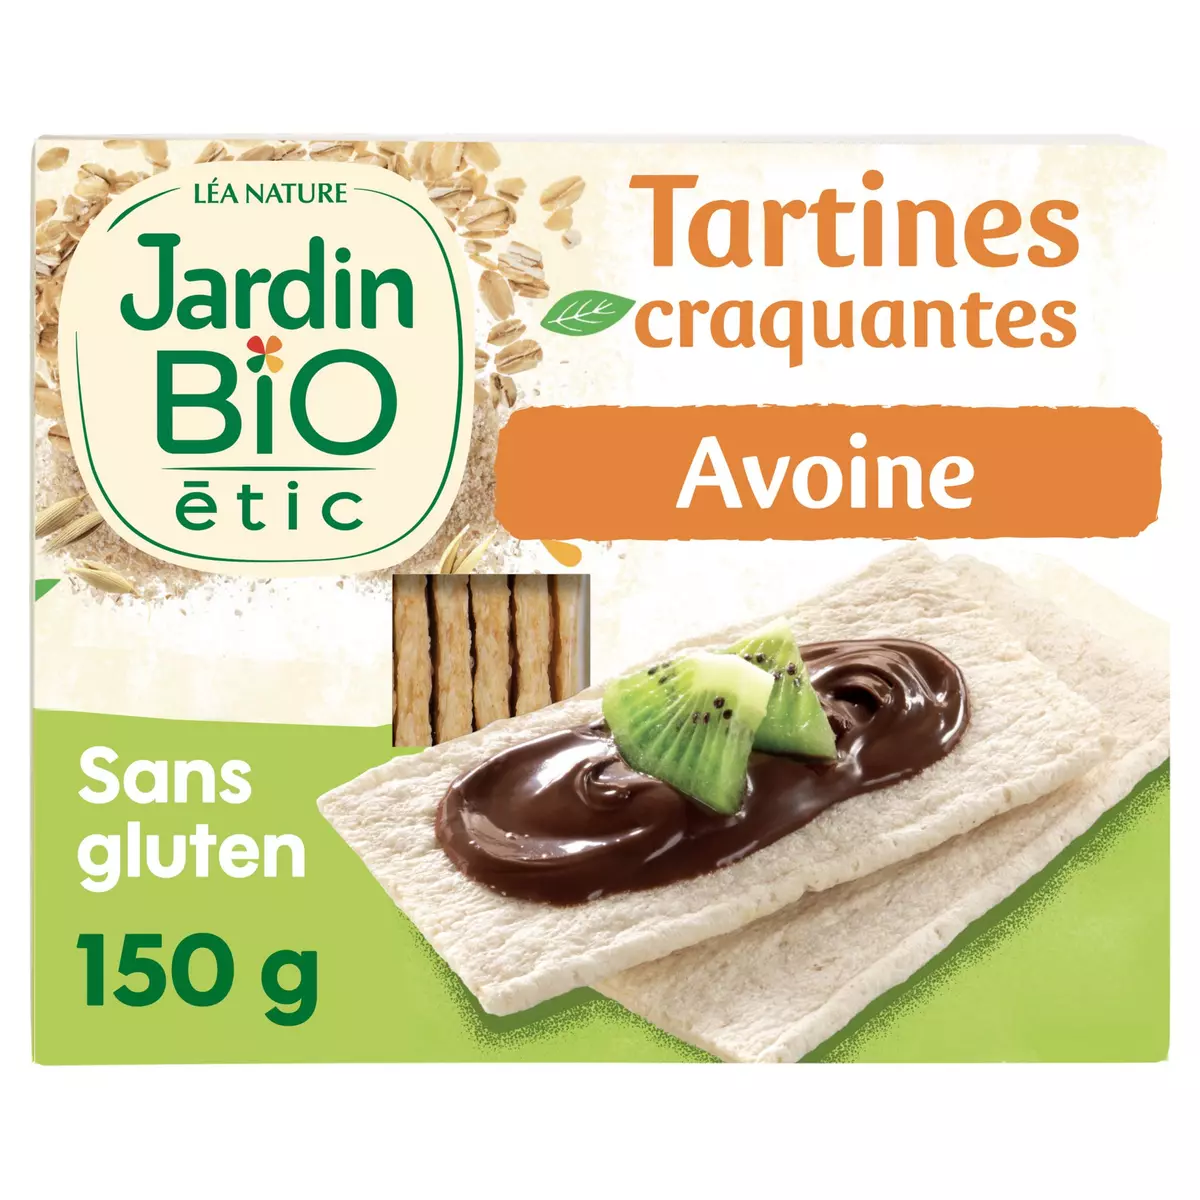 JARDIN BIO ETIC Tartines croquantes avoine sans gluten 150g